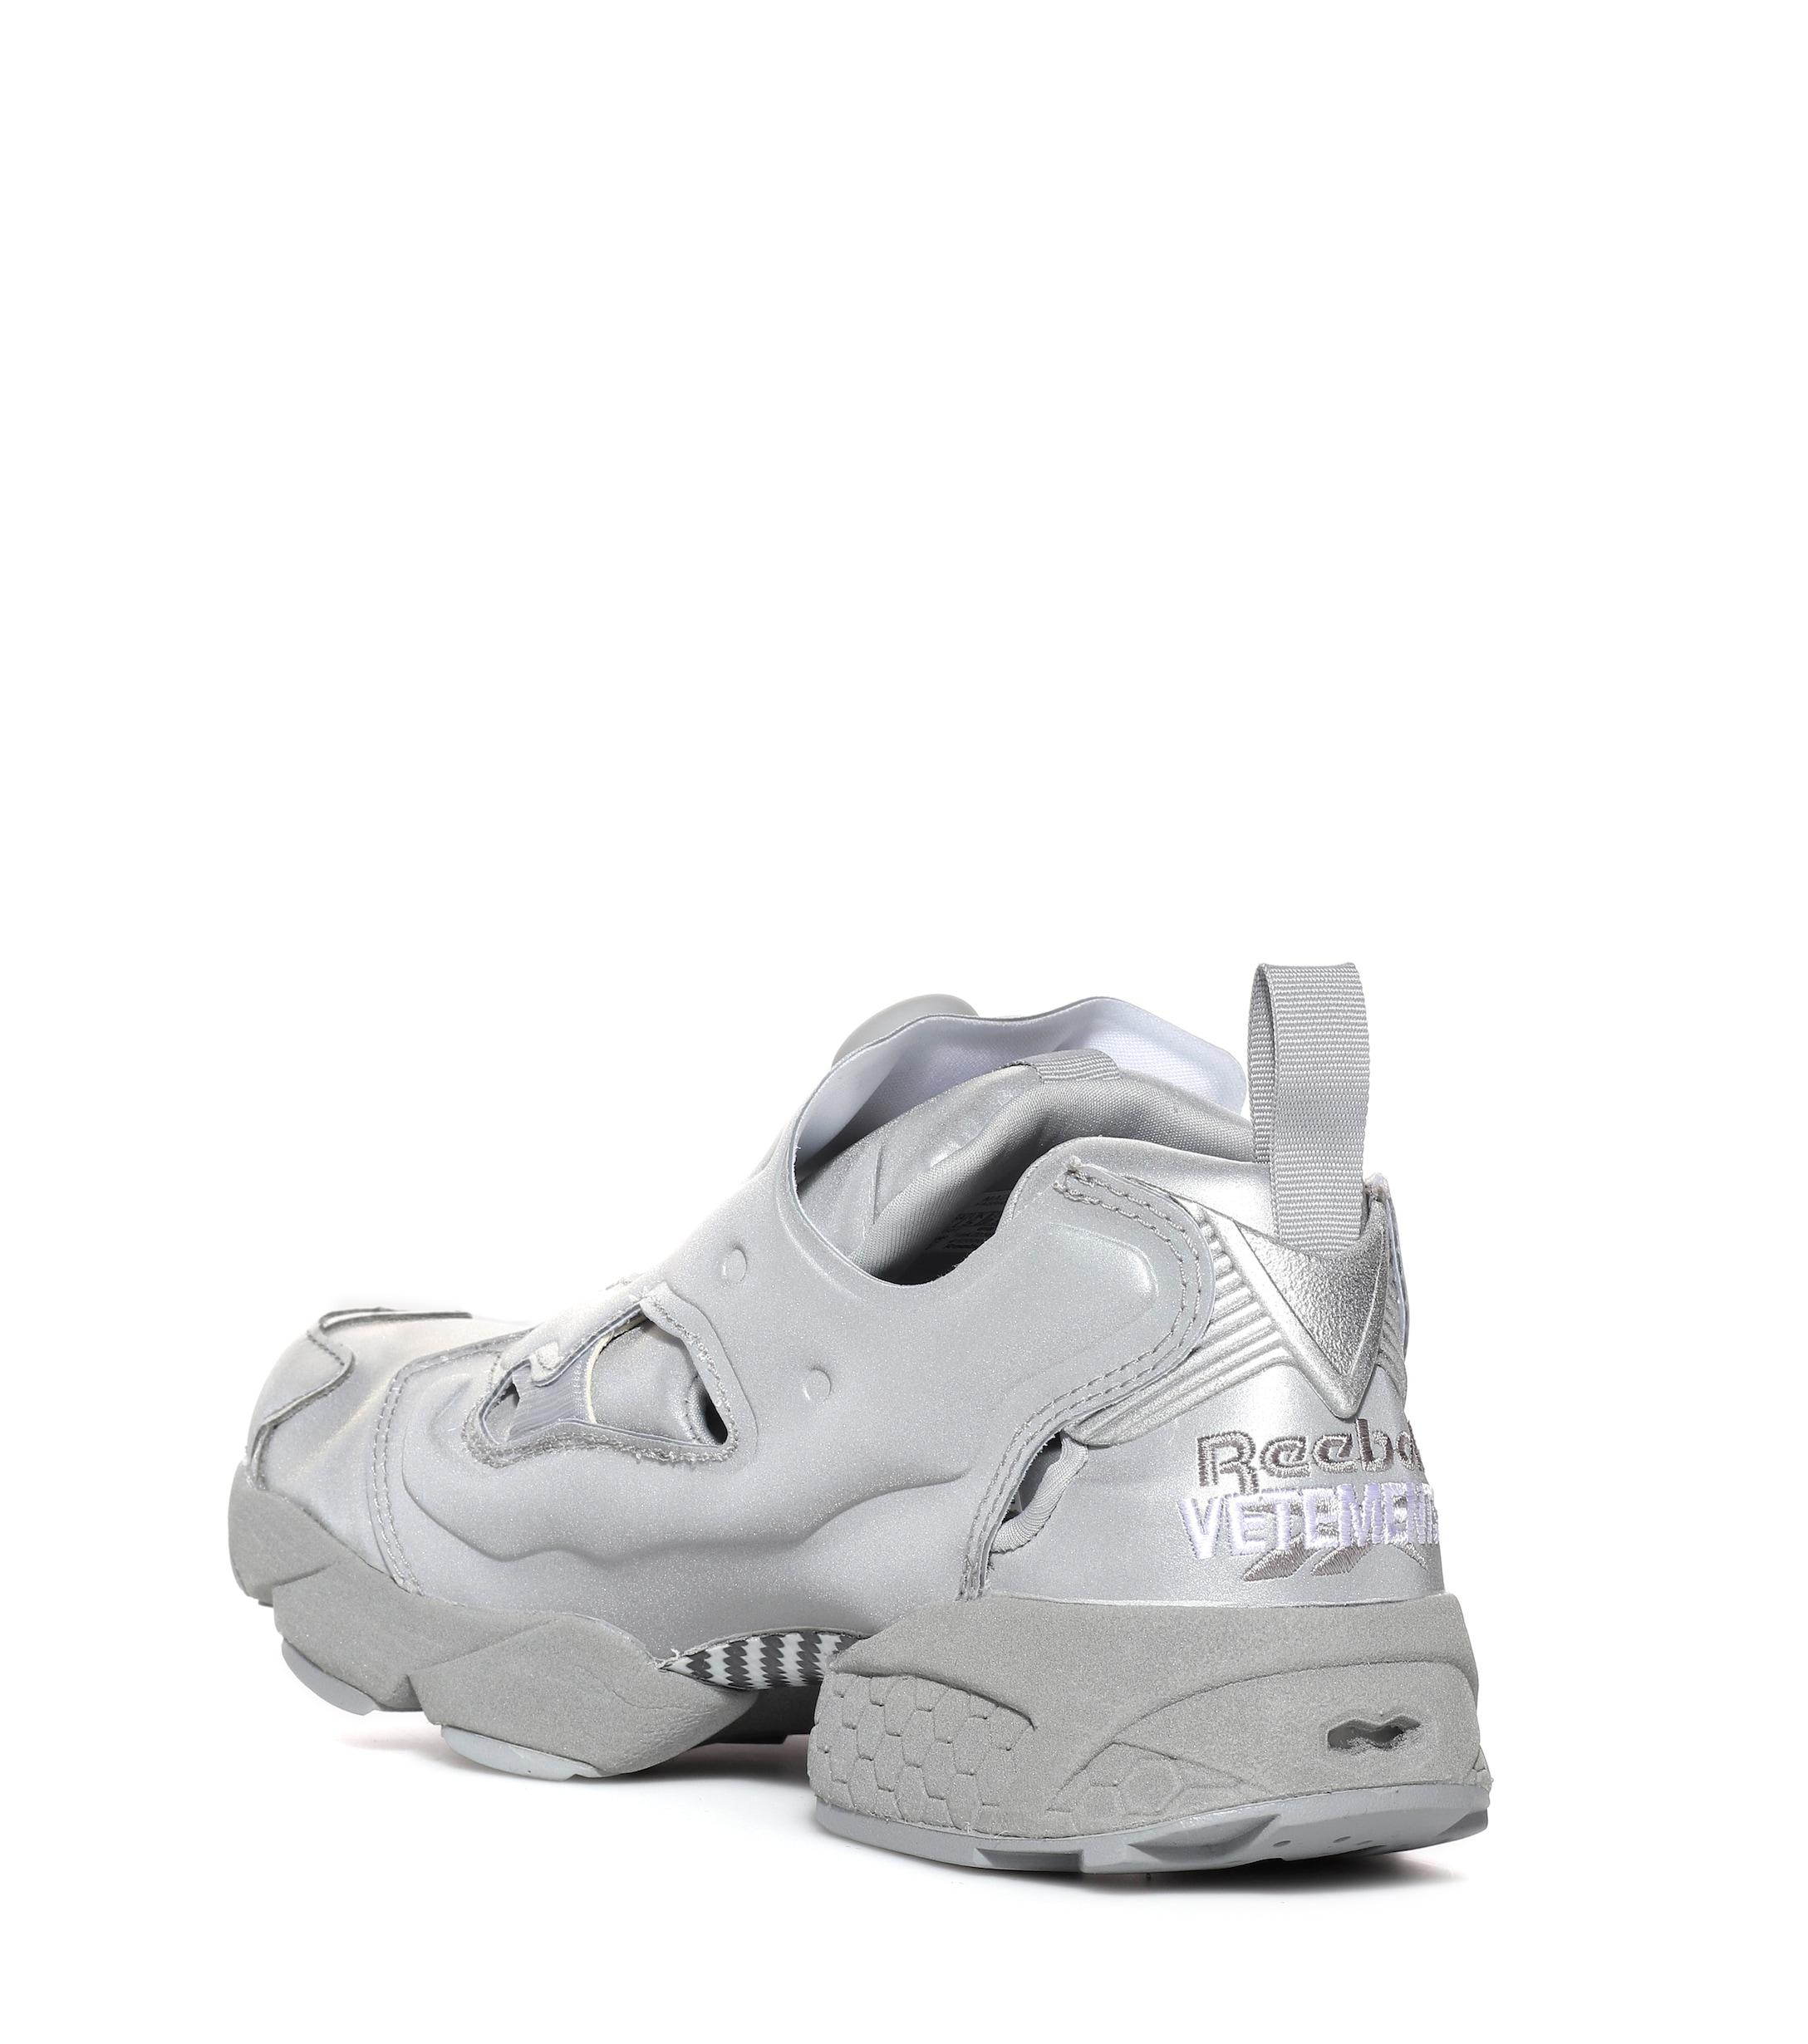 Vetements X Reebok Instapump Fury Sneakers in Silver (Metallic) - Lyst